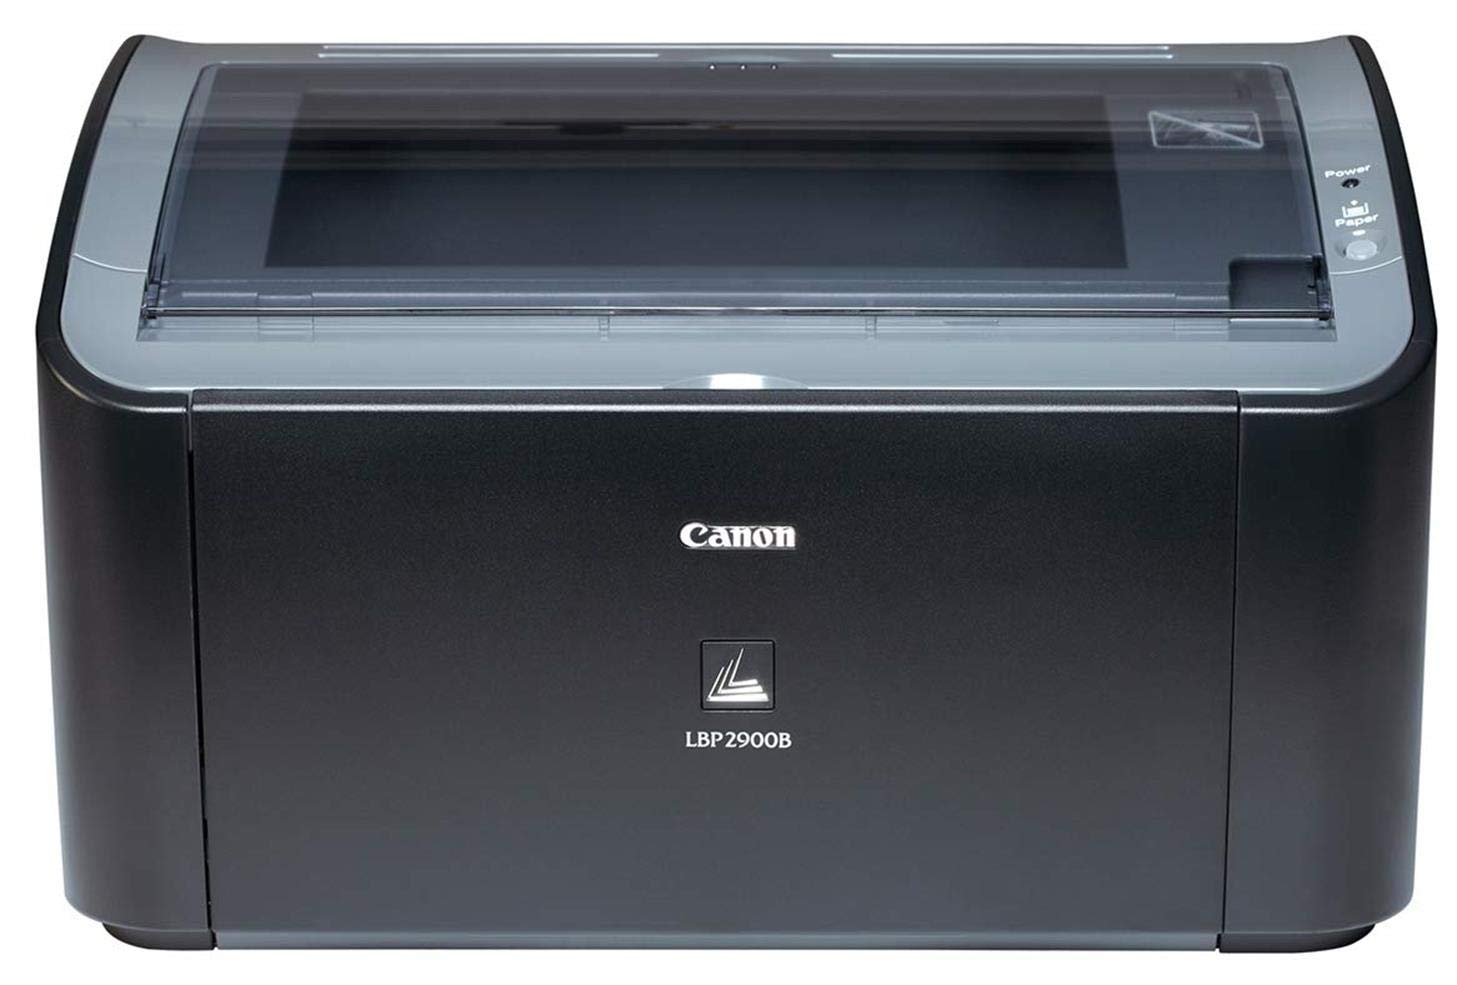 Used/refurbished Canon Laser Shot LBP 2900B Printer